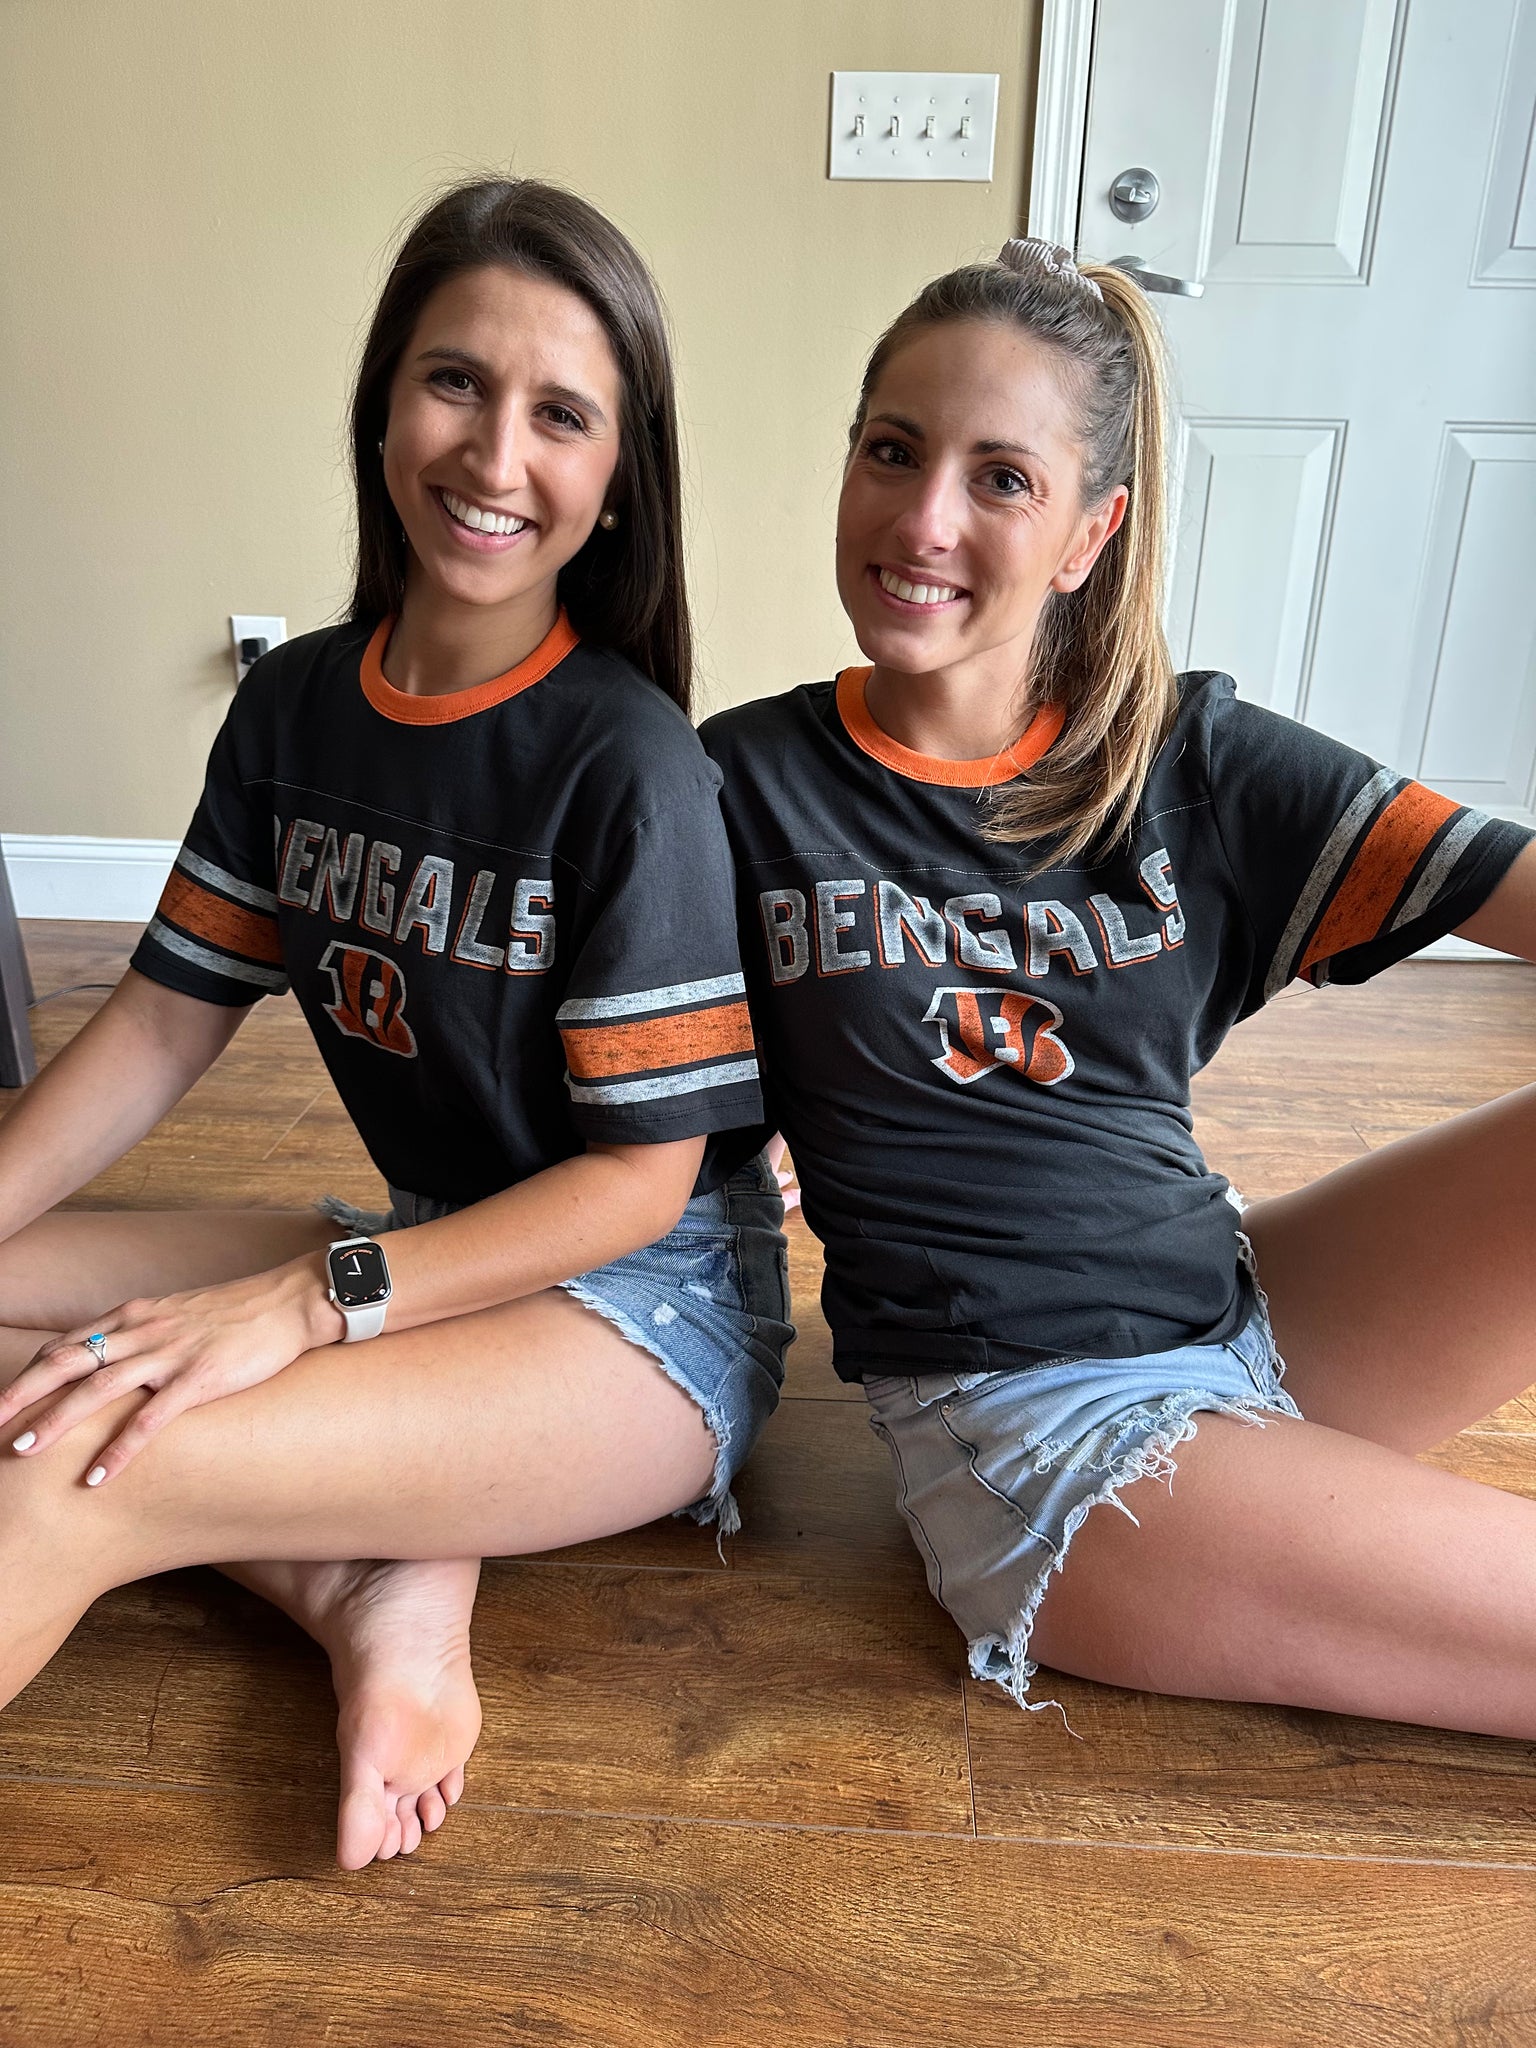 NFL Team Apparel Youth Girls Cincinnati Bengals Shirt New S, M, L